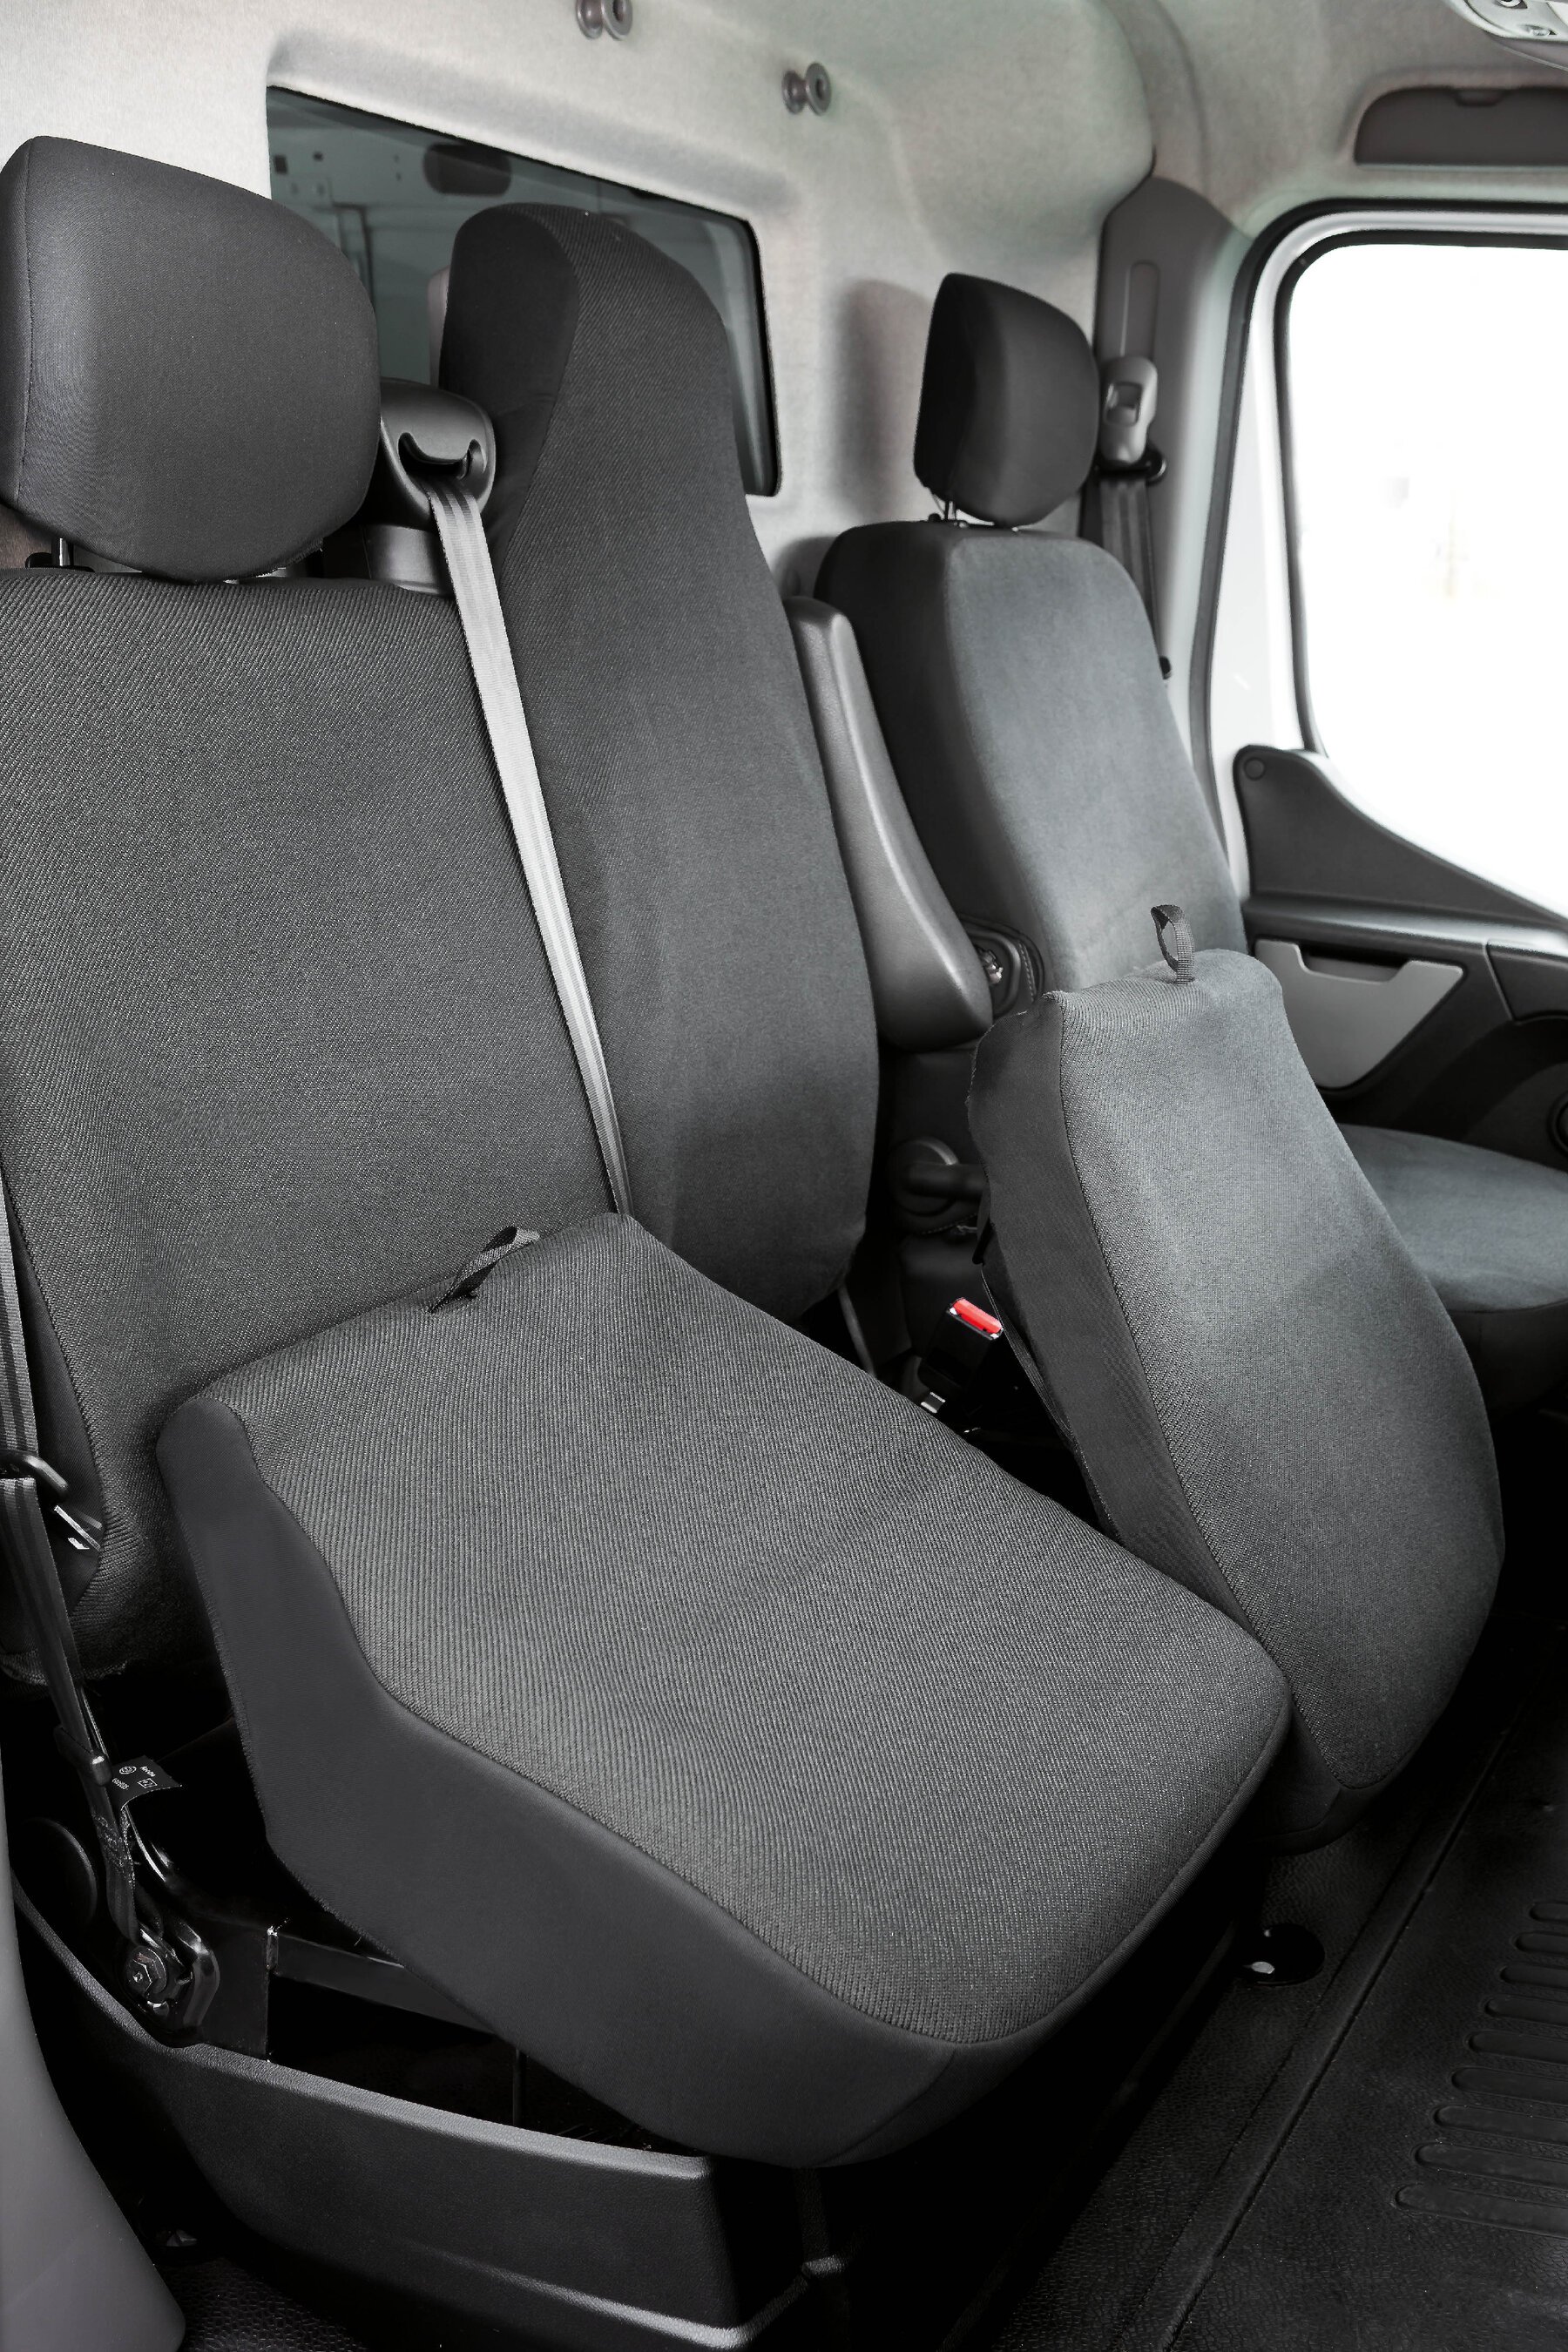 Housse de siège Transporter en tissu pour Opel Movano, Renault Master, Nissan Interstar, siège simple et double